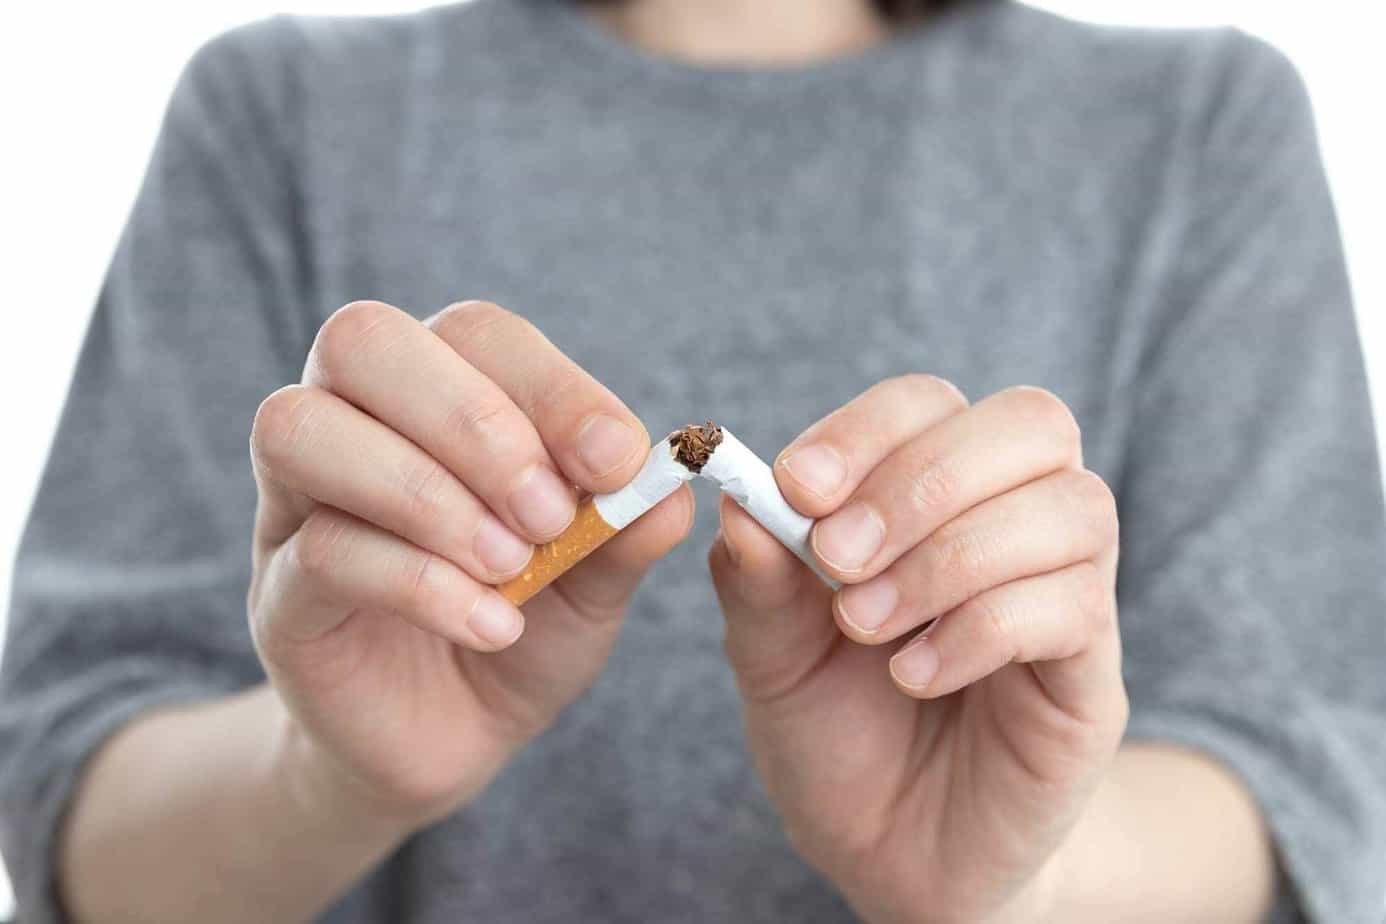 A closeup of a woman's hands breaking a cigarette in half.